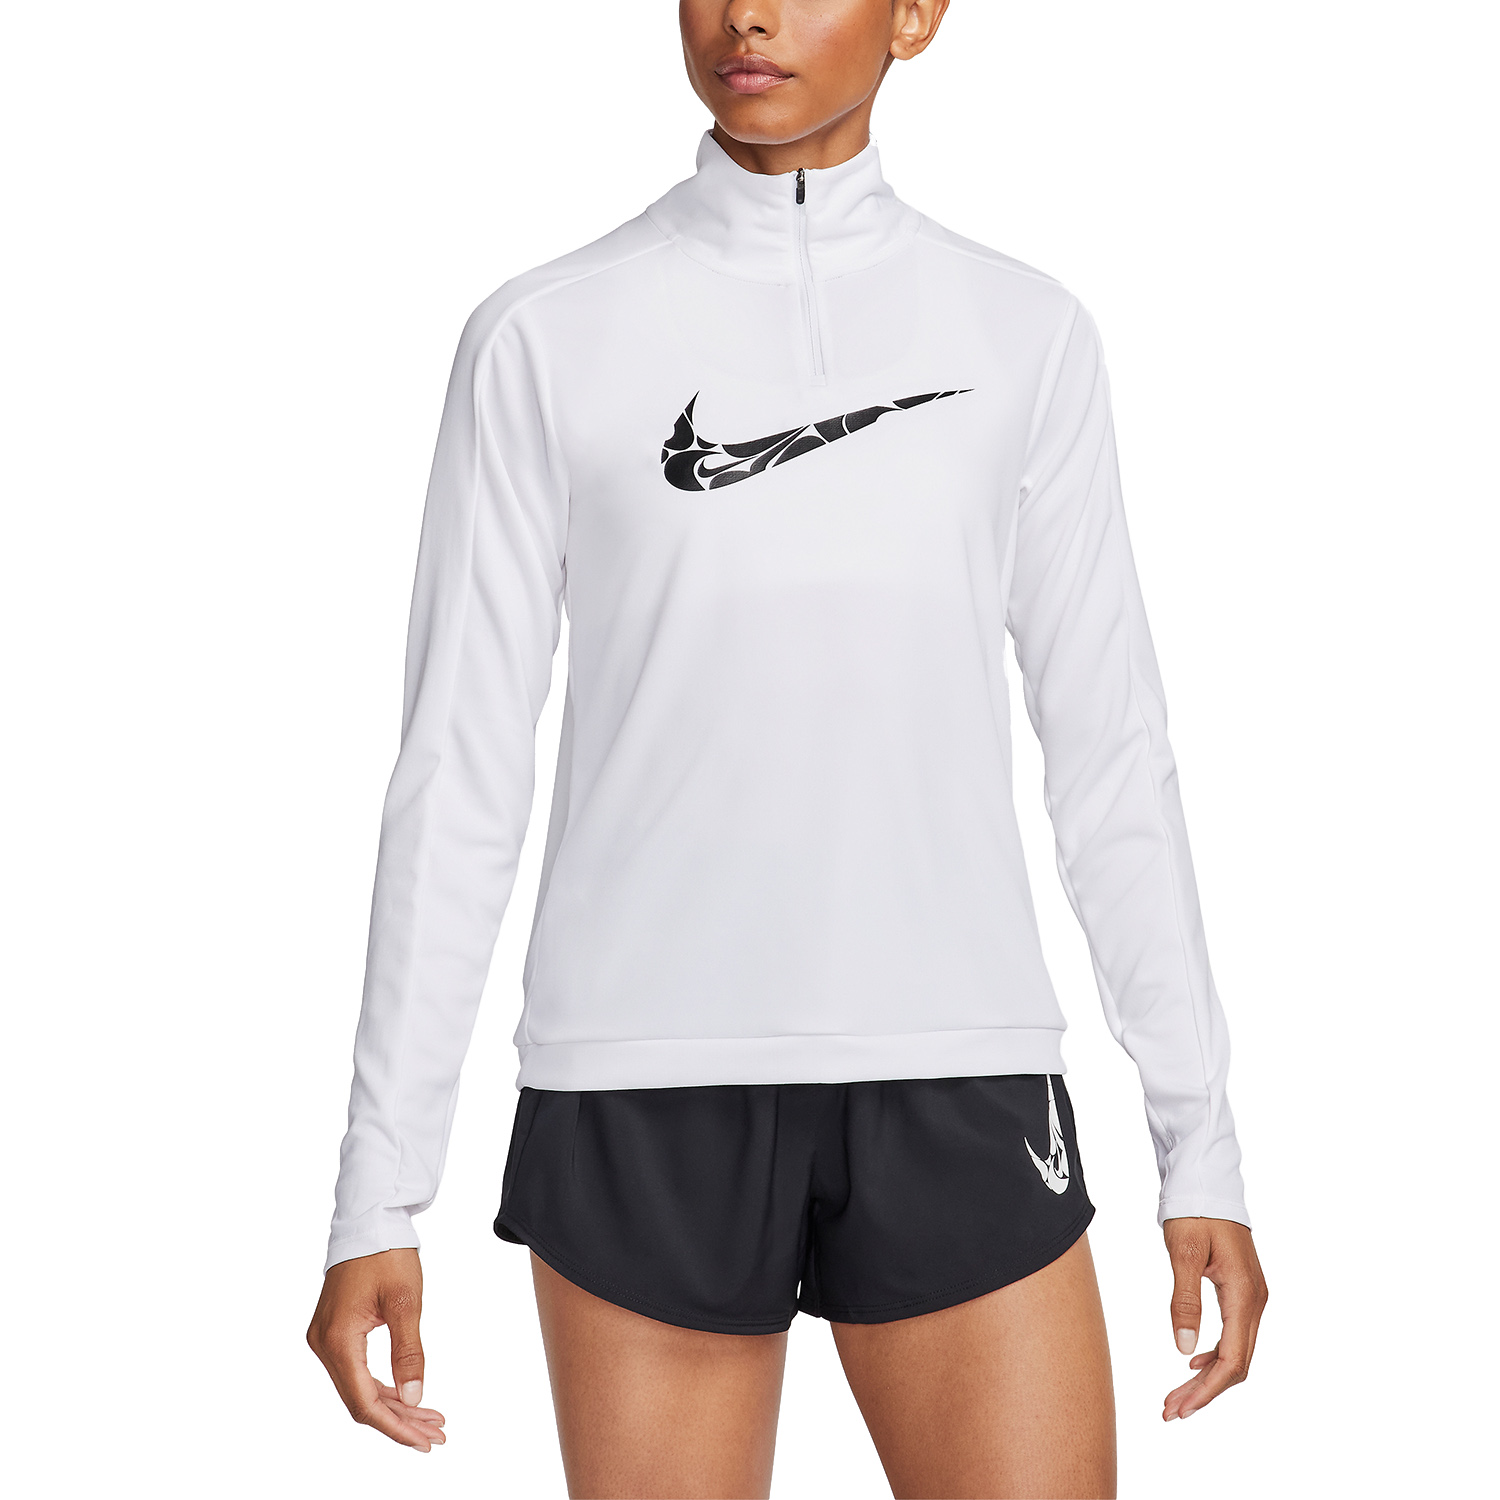 Nike Swoosh Camisa - White/Black